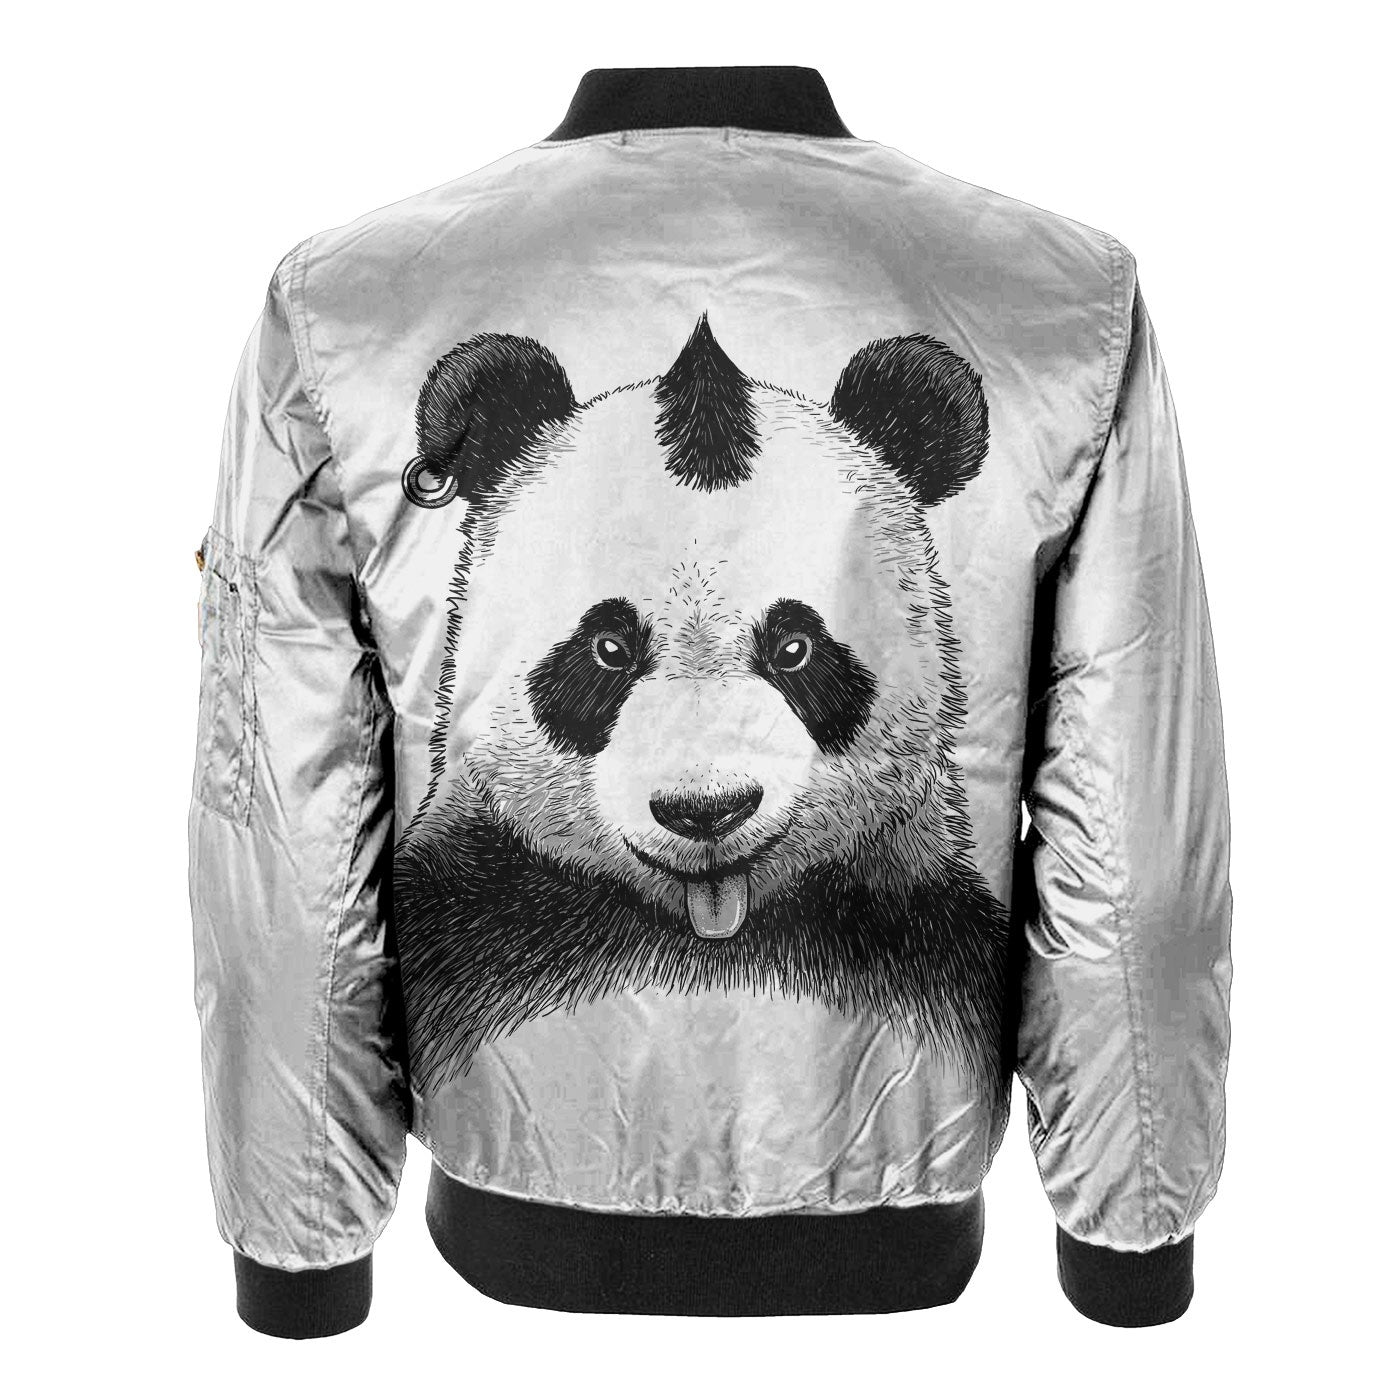 Punk Panda Bomber Jacket